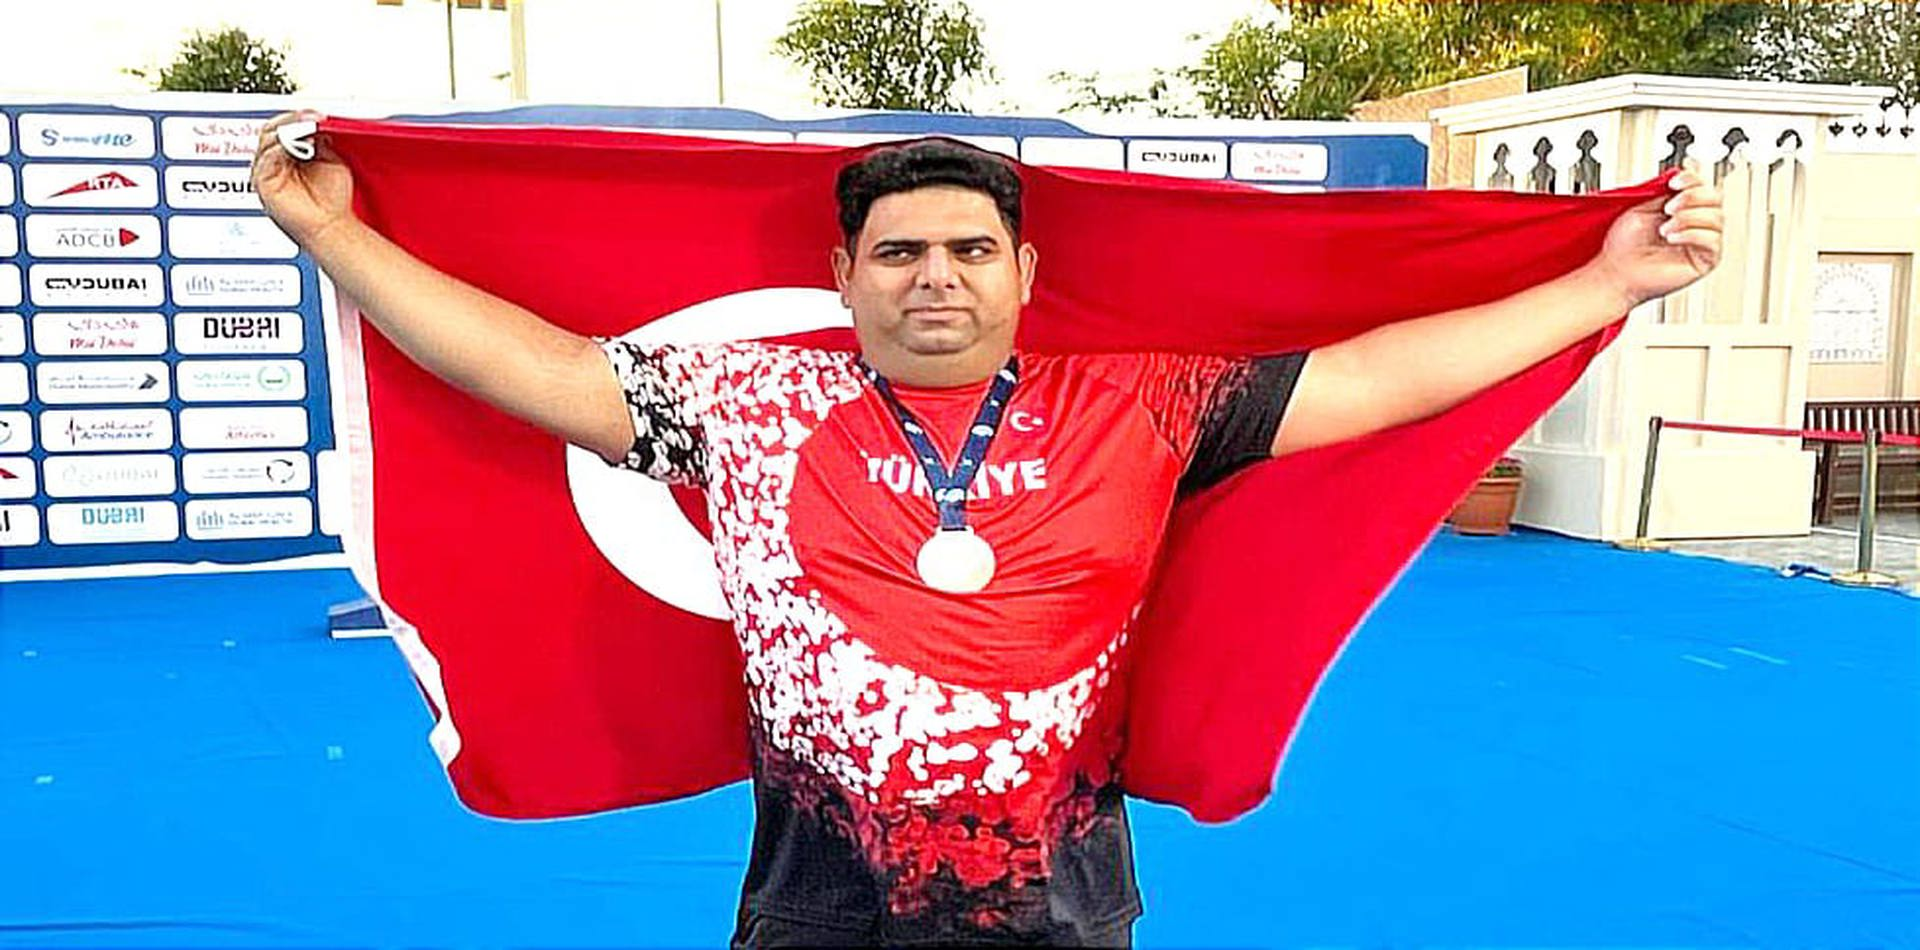  PARA Atlet Muhsin Kaedi'den Avrupa Rekoru